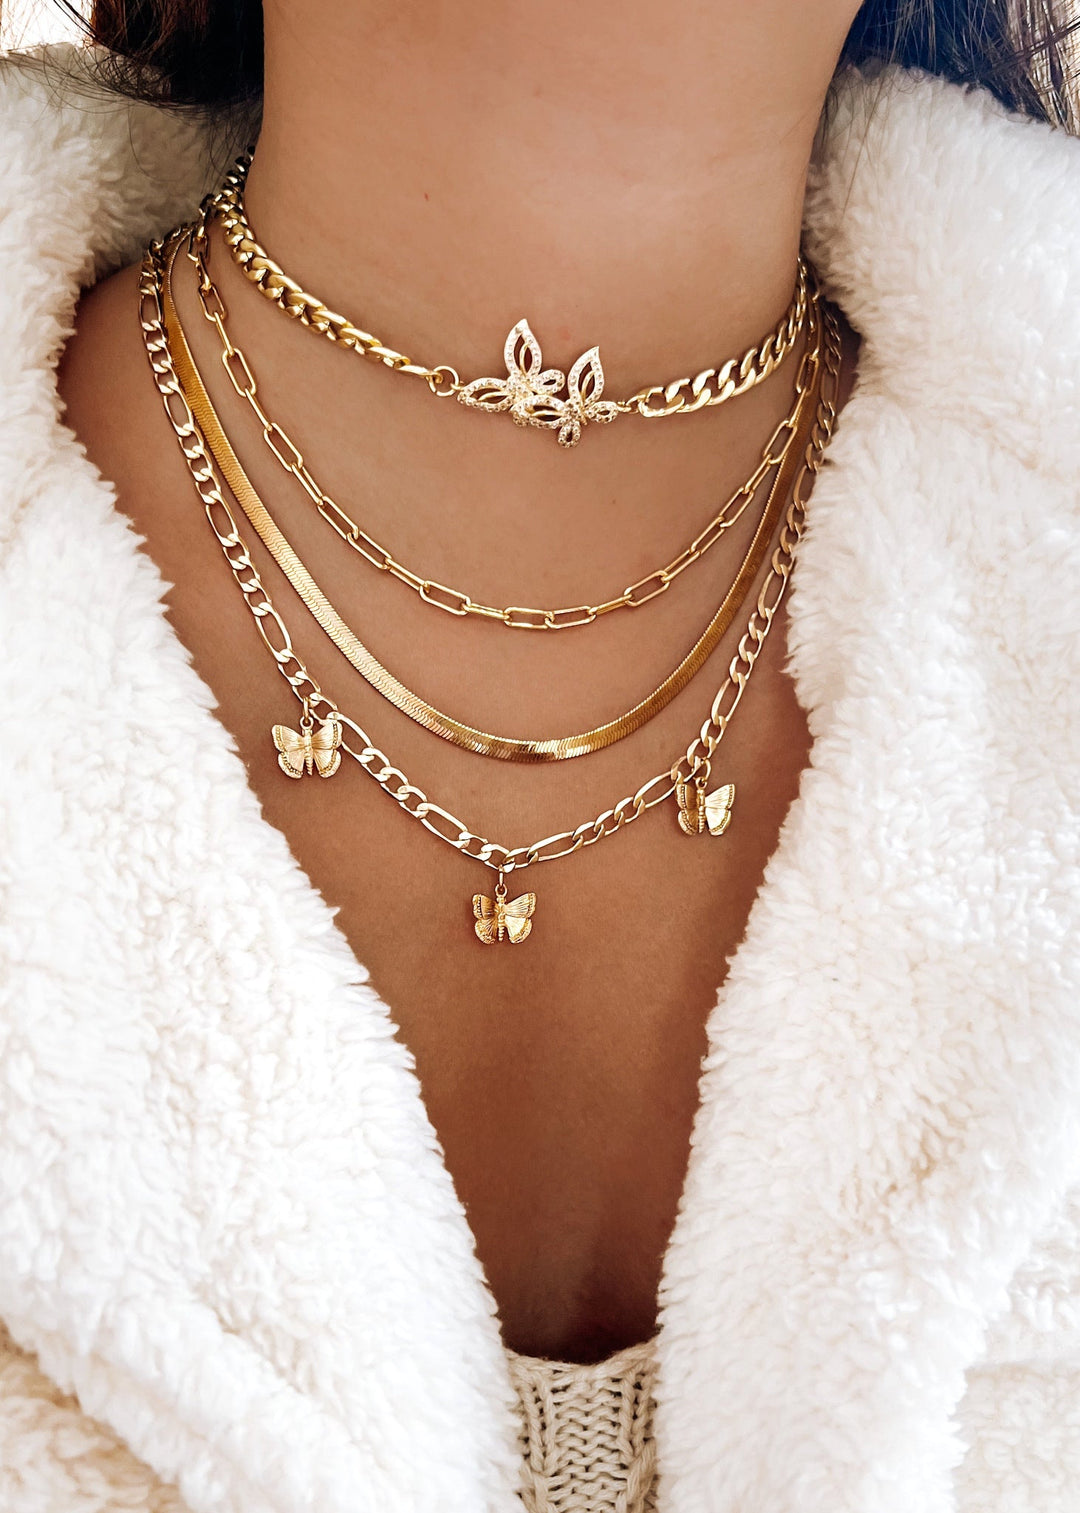 Herringbone Necklace - Gold Filled